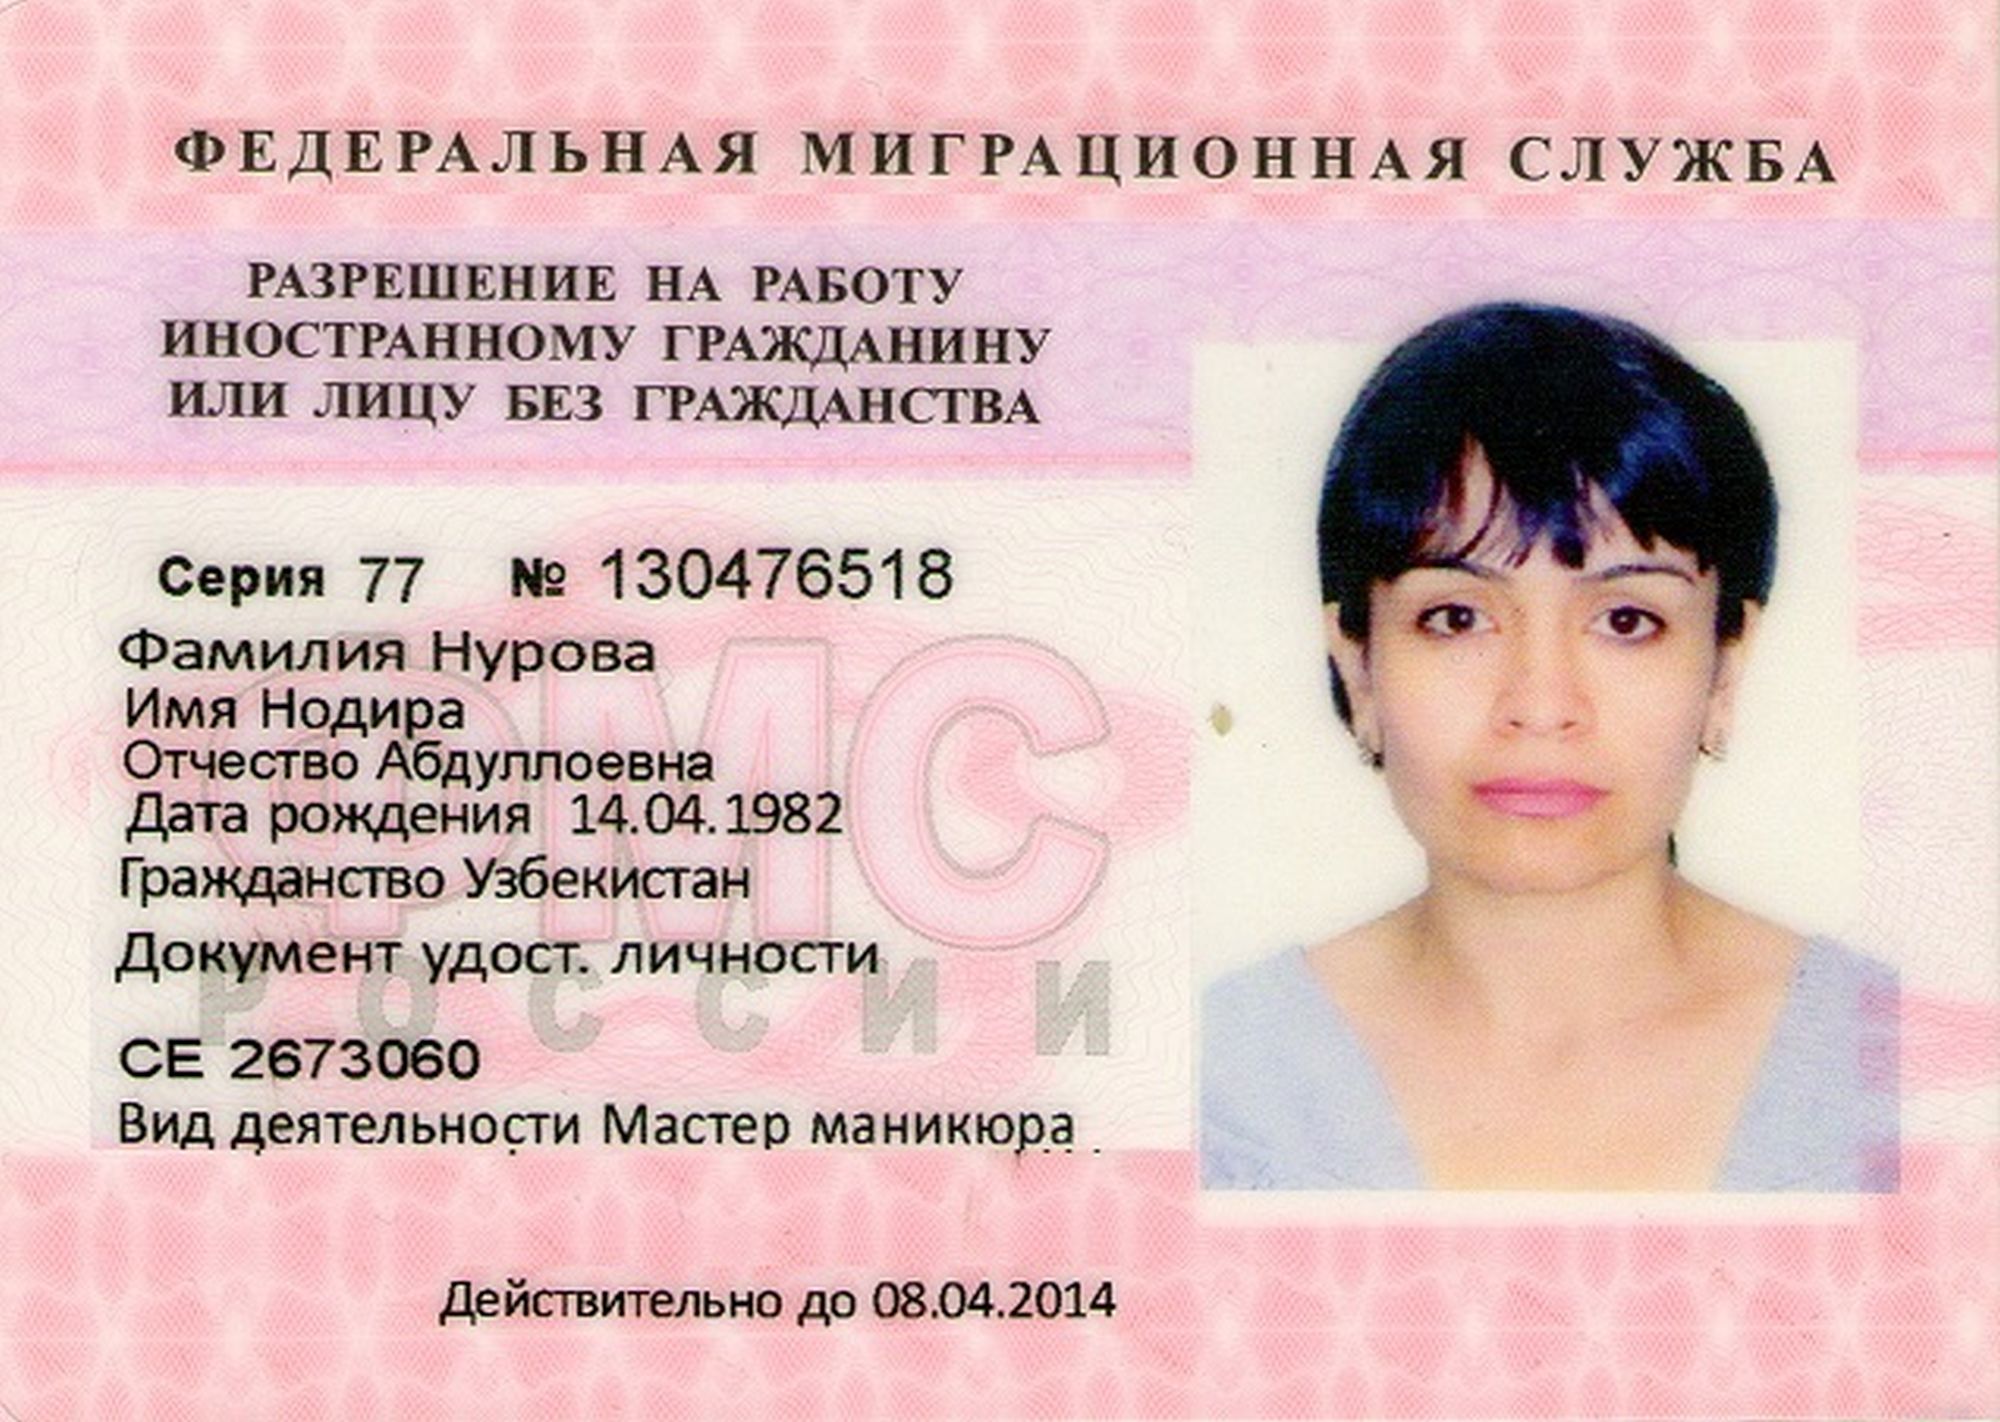 Патент на работу для граждан Узбекистана 2017